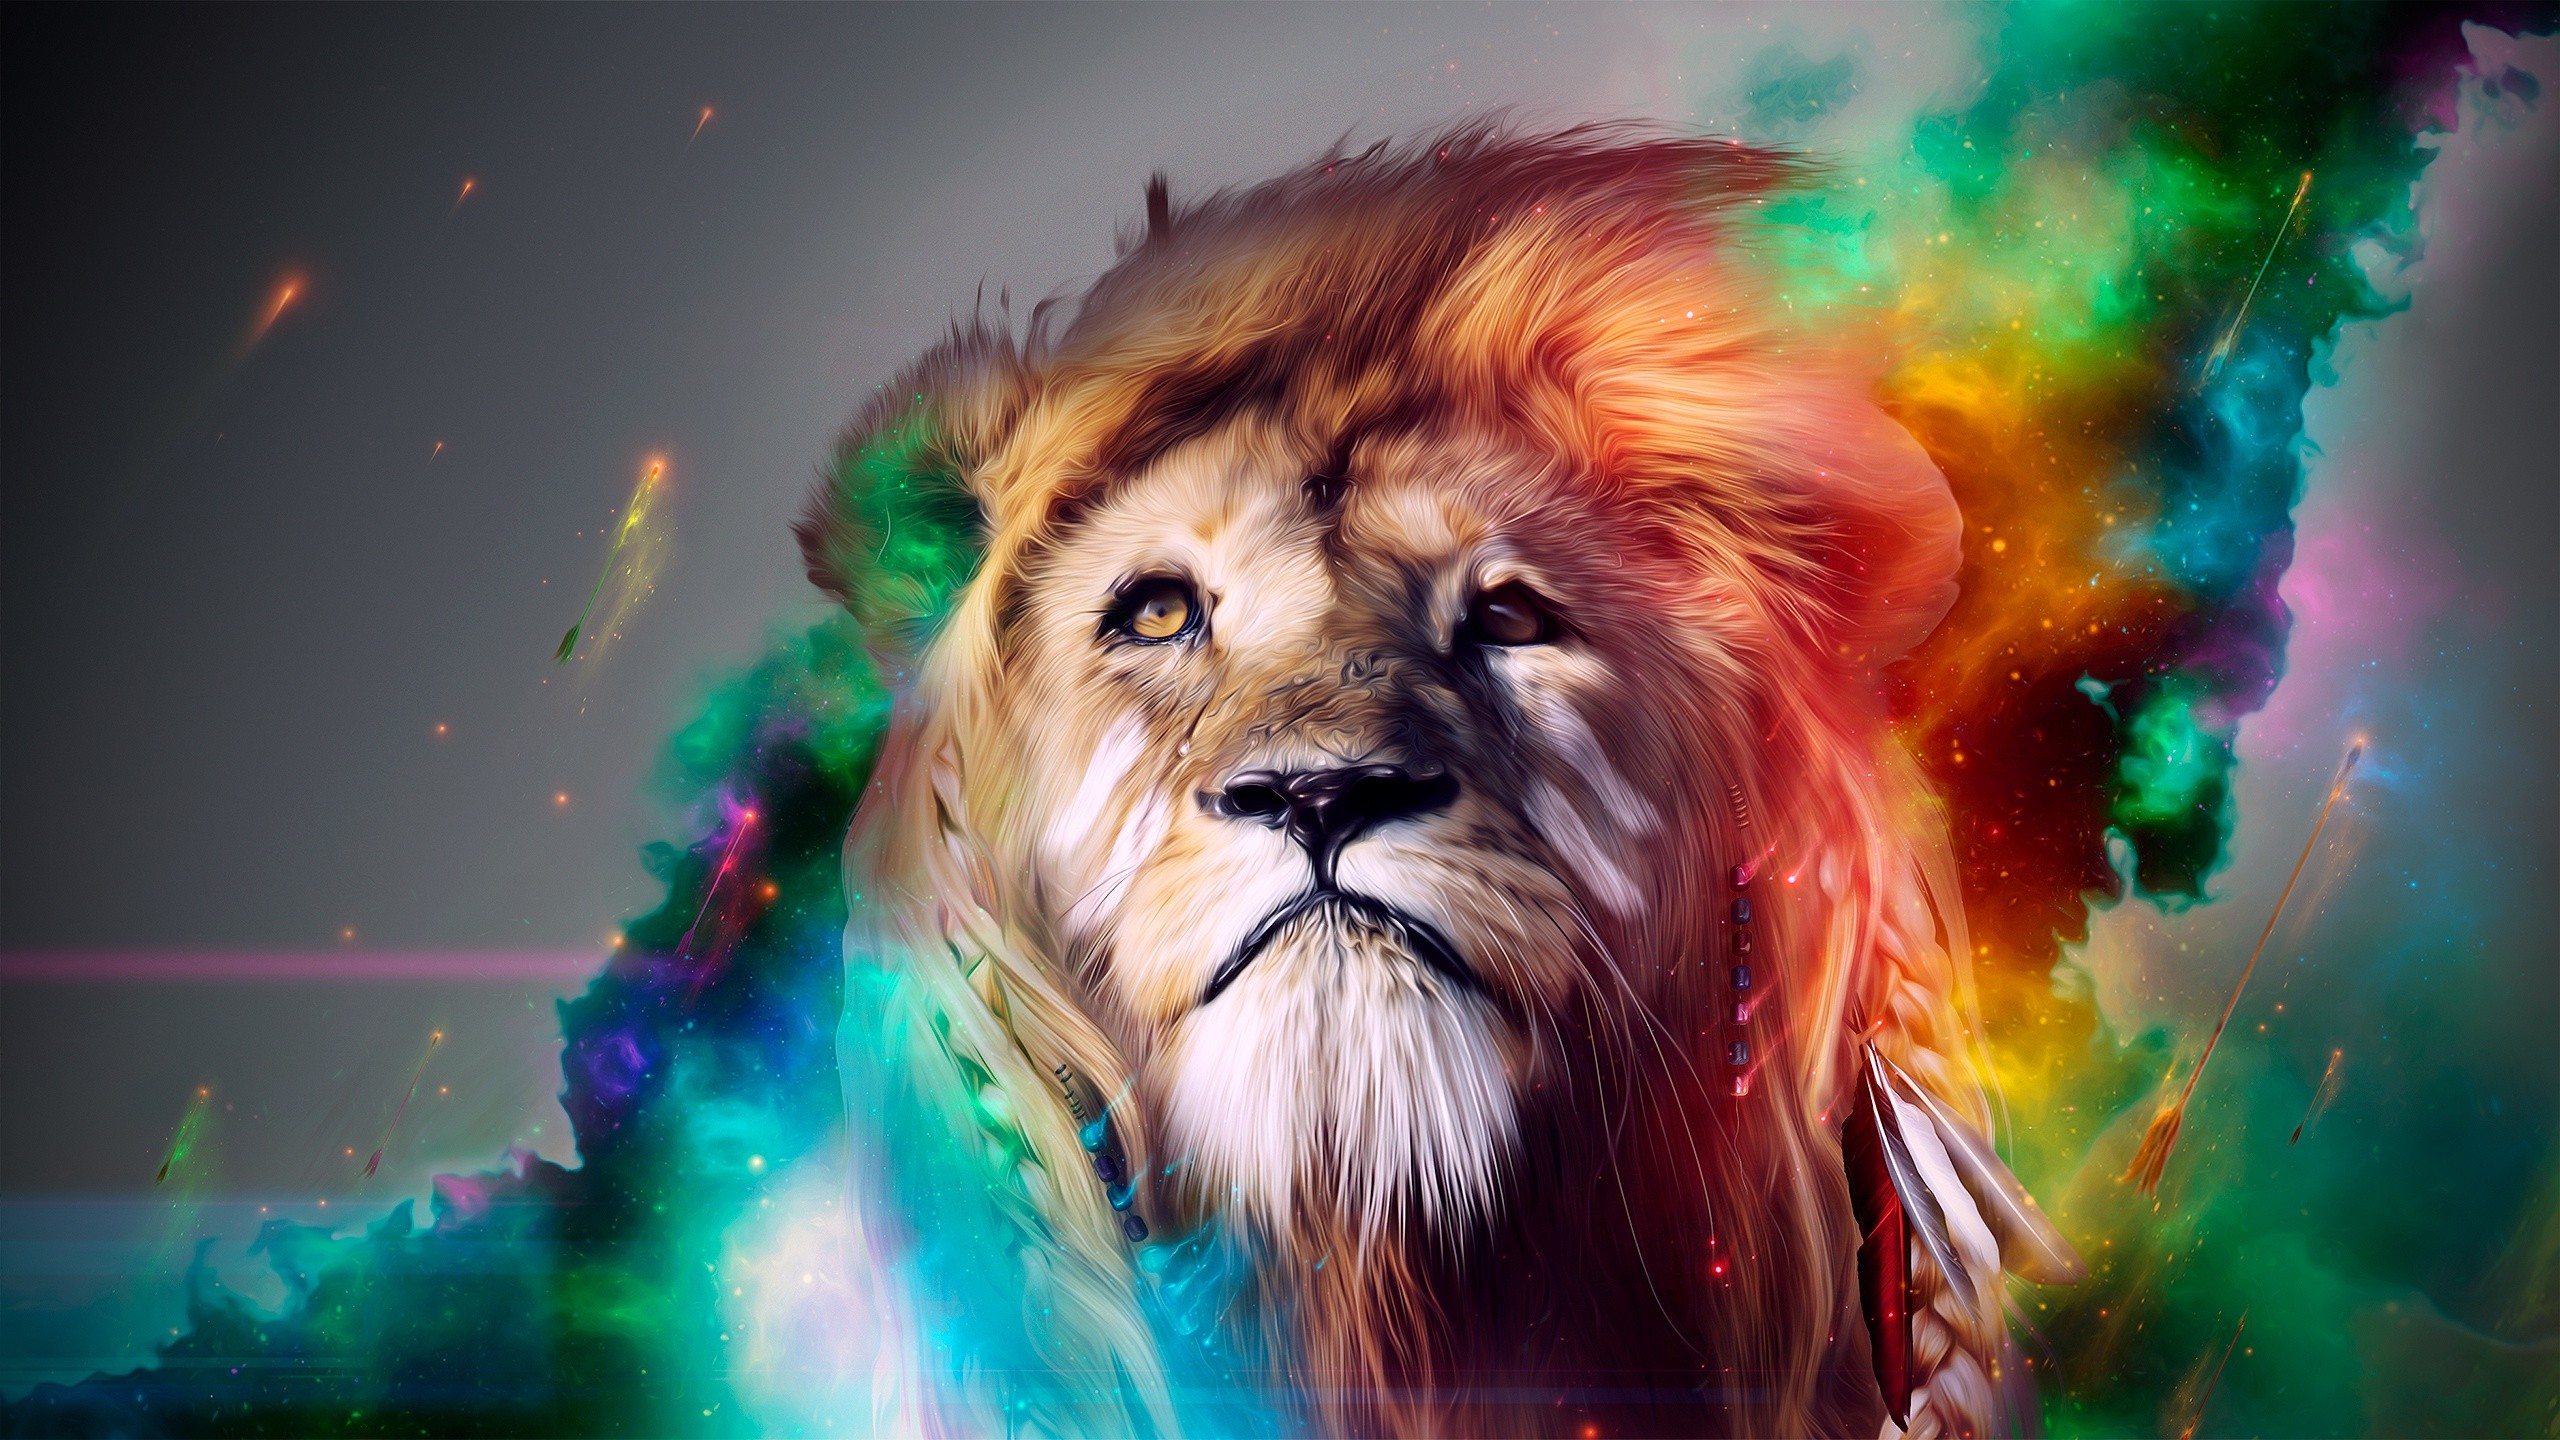 Lion HD Wallpaper Background Image